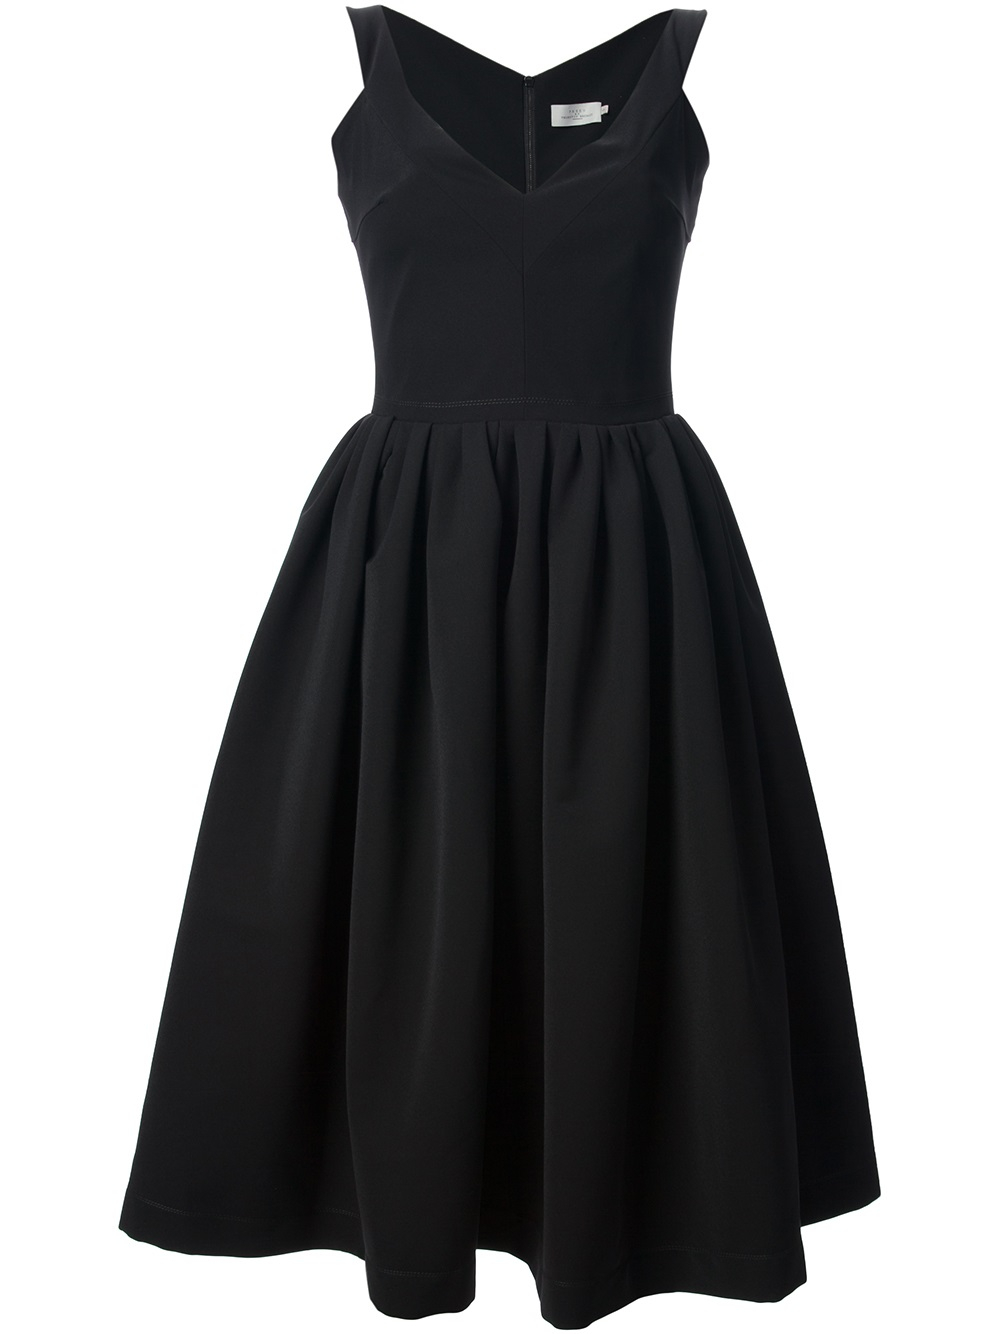 Preen By Thornton Bregazzi Flo Dress in Black - Lyst